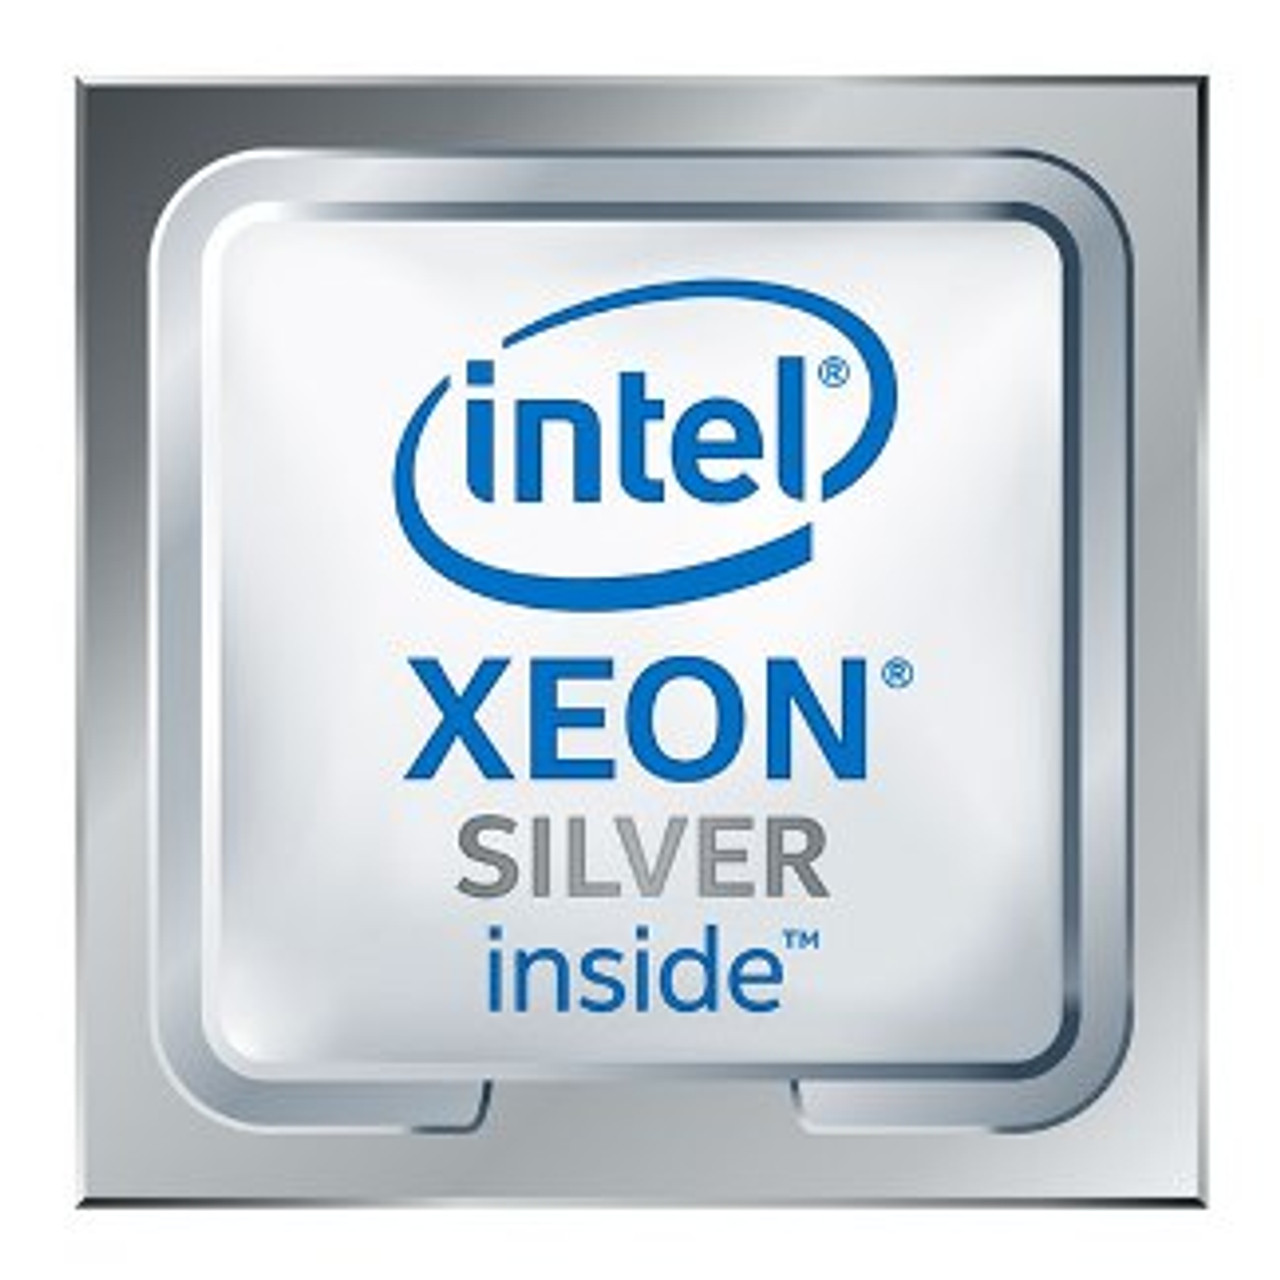 INTEL SRFBM Xeon 8-core Silver 4208 2.1ghz 11mb Smart Cache 9.6gt/s Upi Speed Socket Lga3647 14nm 85w Processor Only